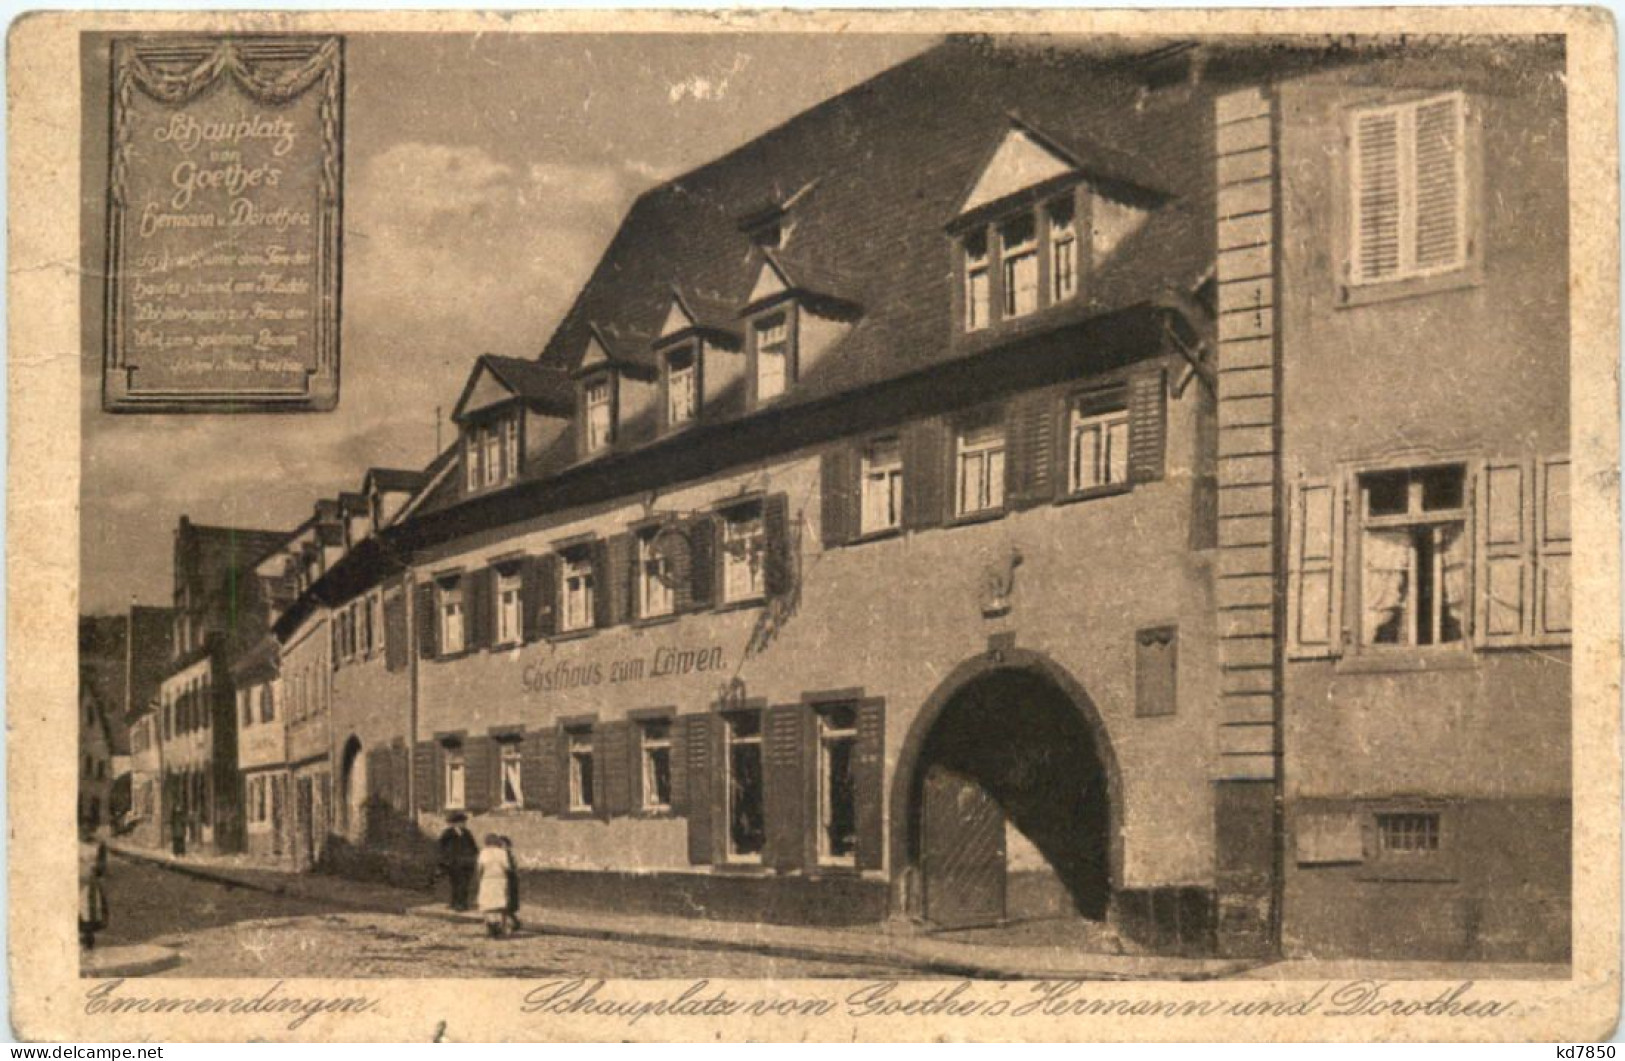 Emmendingen - Gasthaus Zum Löwen - Emmendingen